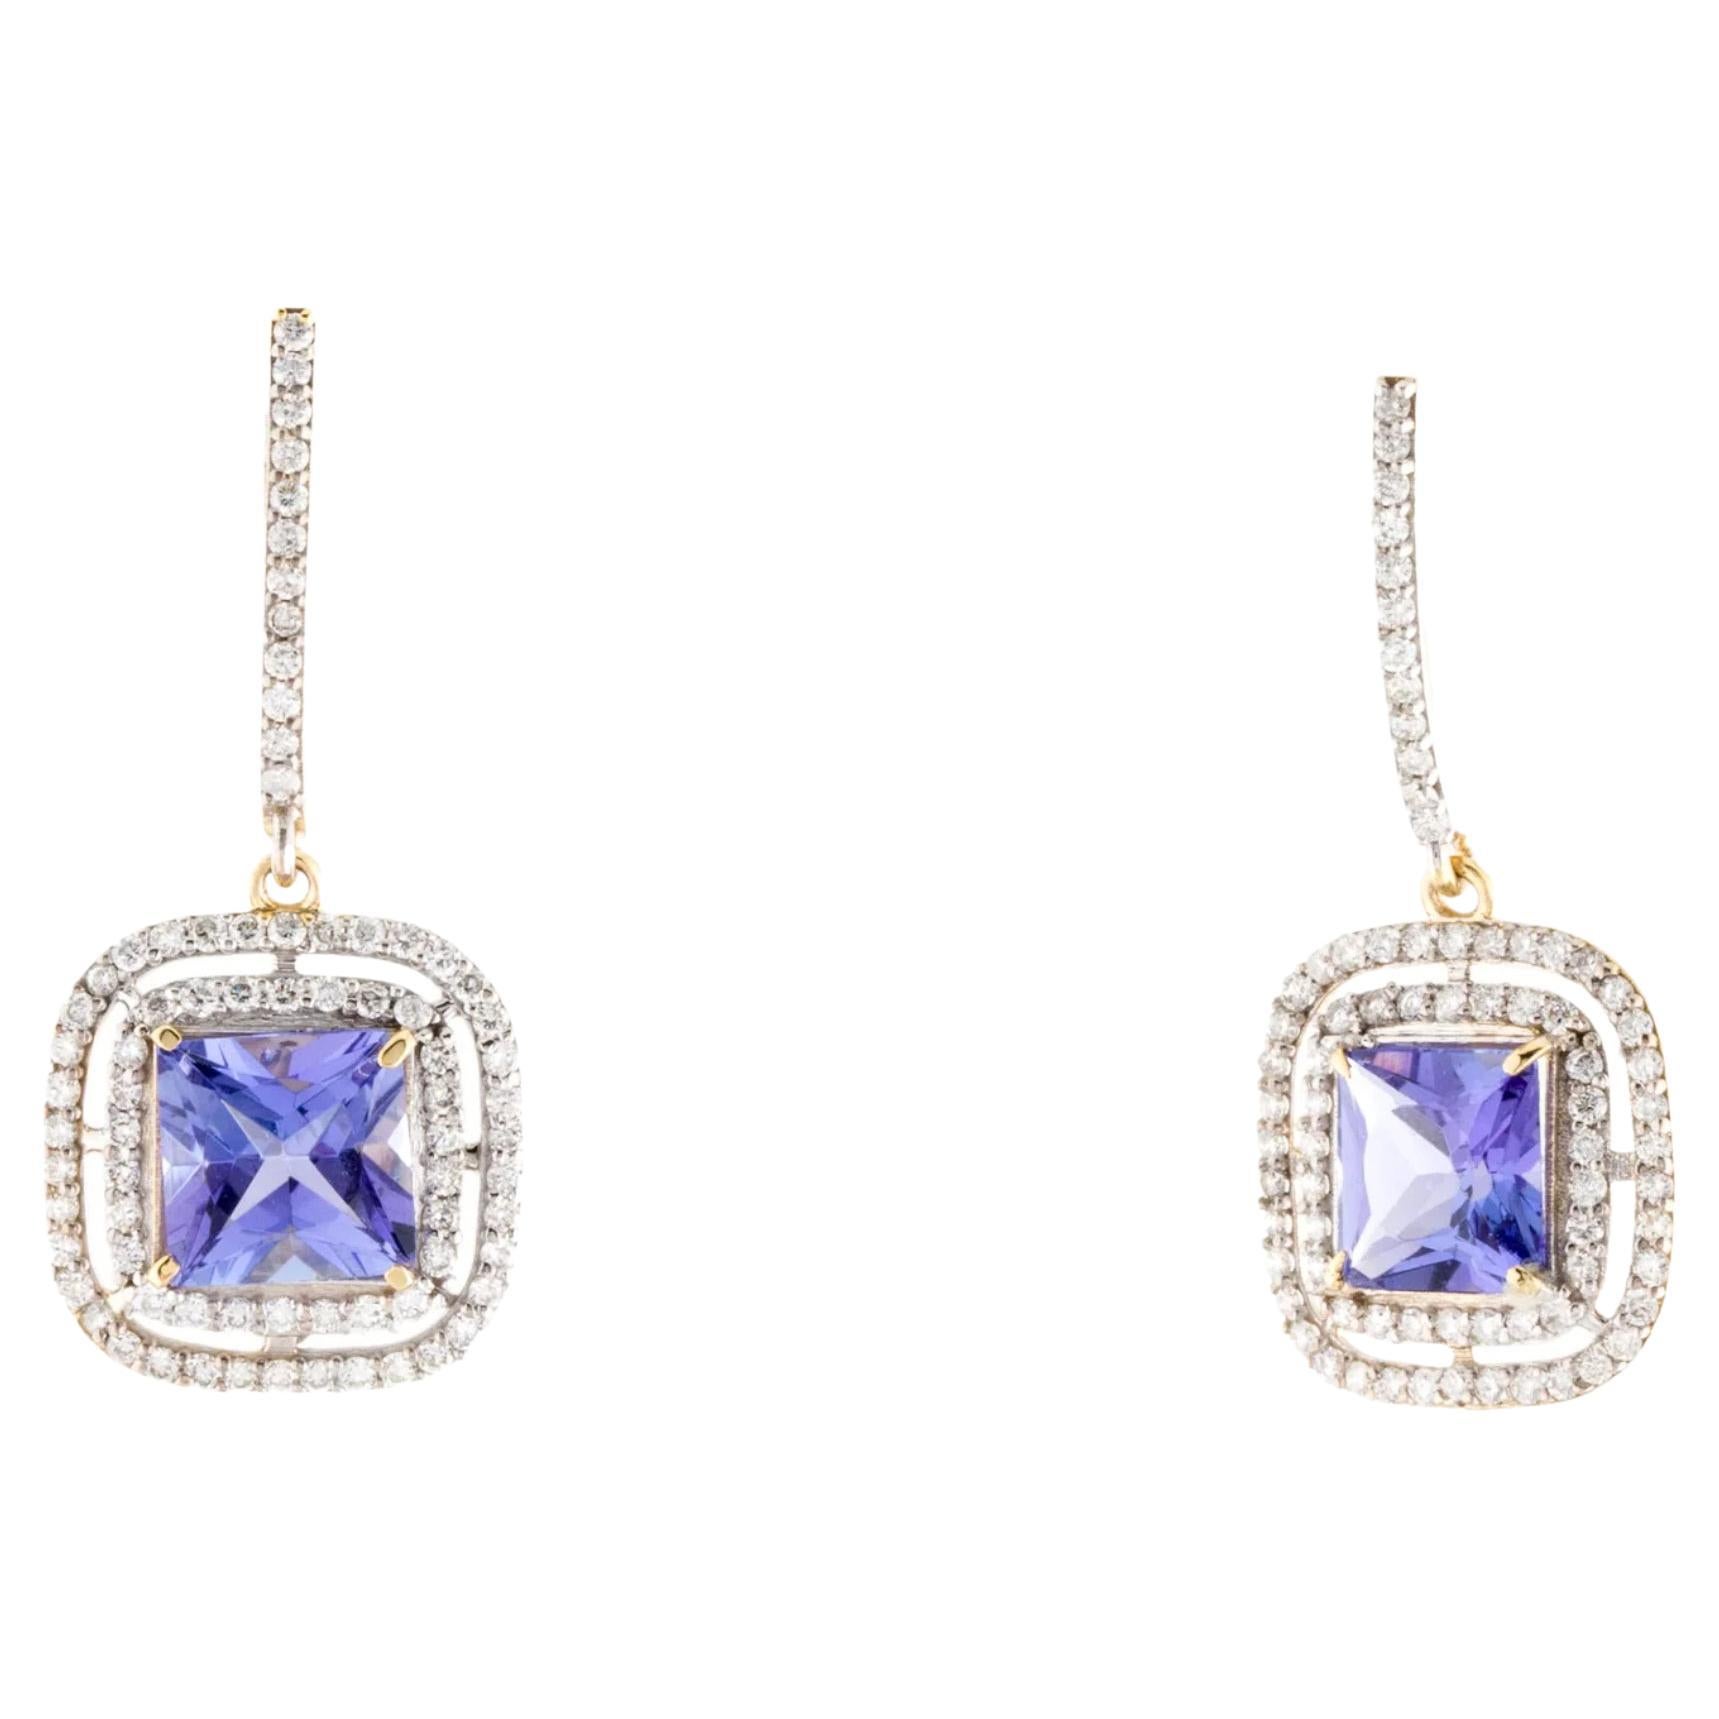 14K Tanzanite & Diamond Drop Earrings - Exquisite Sparkle, Timeless Elegance For Sale